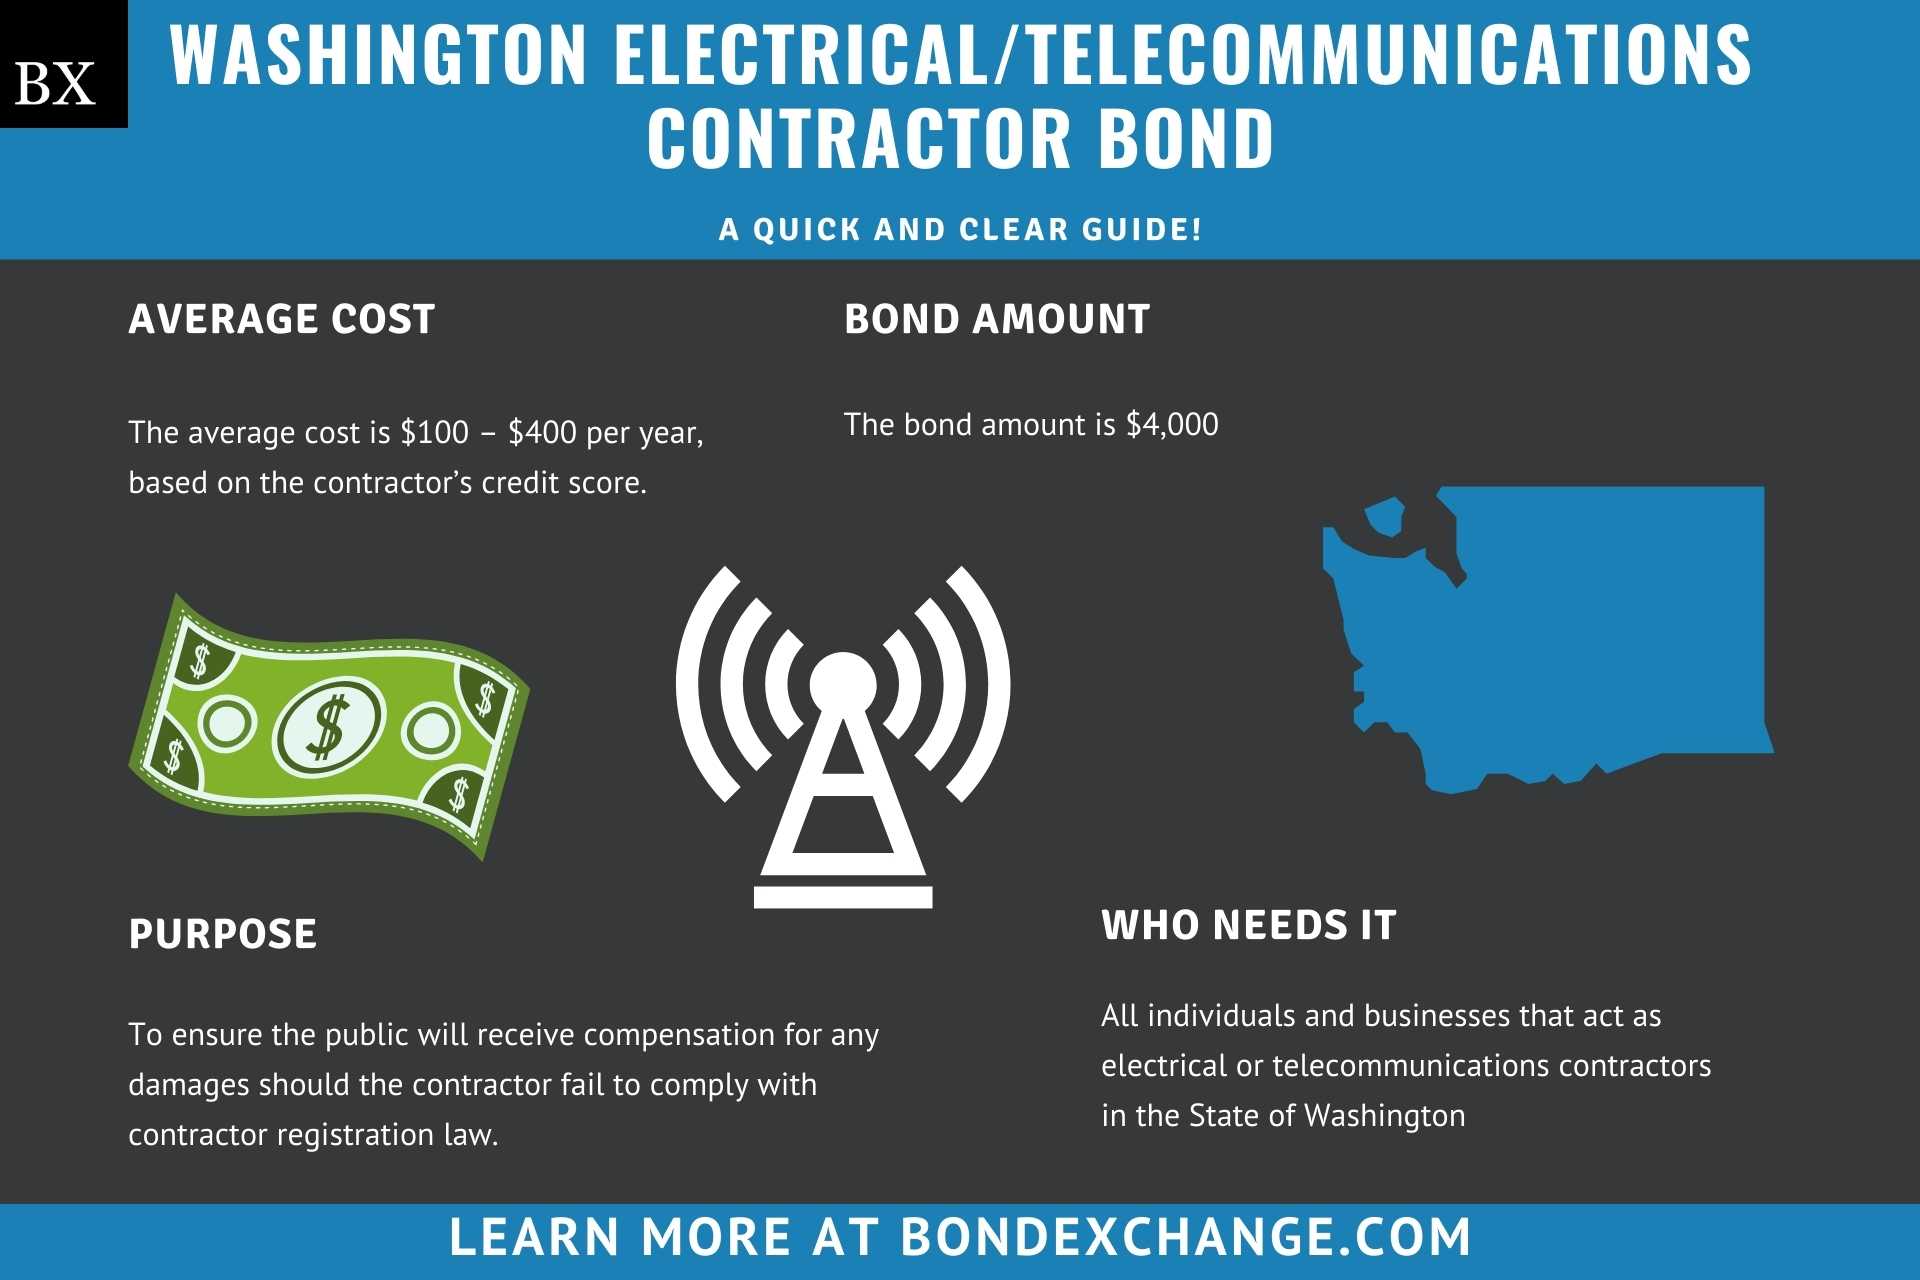 Washington ElectricalTelecommunications Contractor Bond